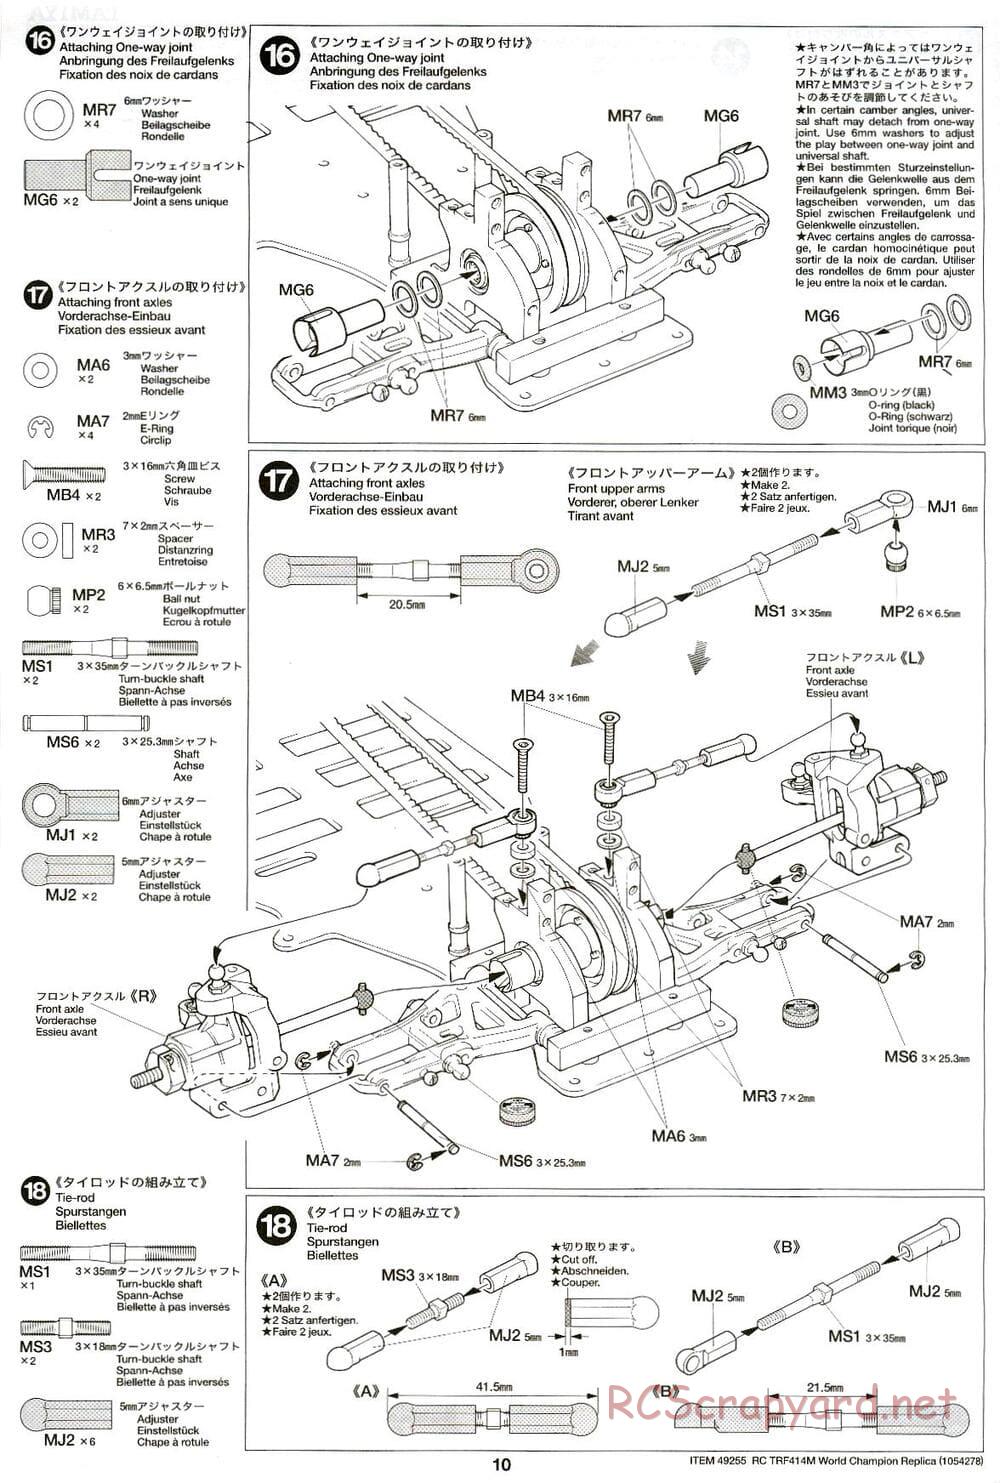 Tamiya - TRF414M World Champion Replica Chassis - Manual - Page 10